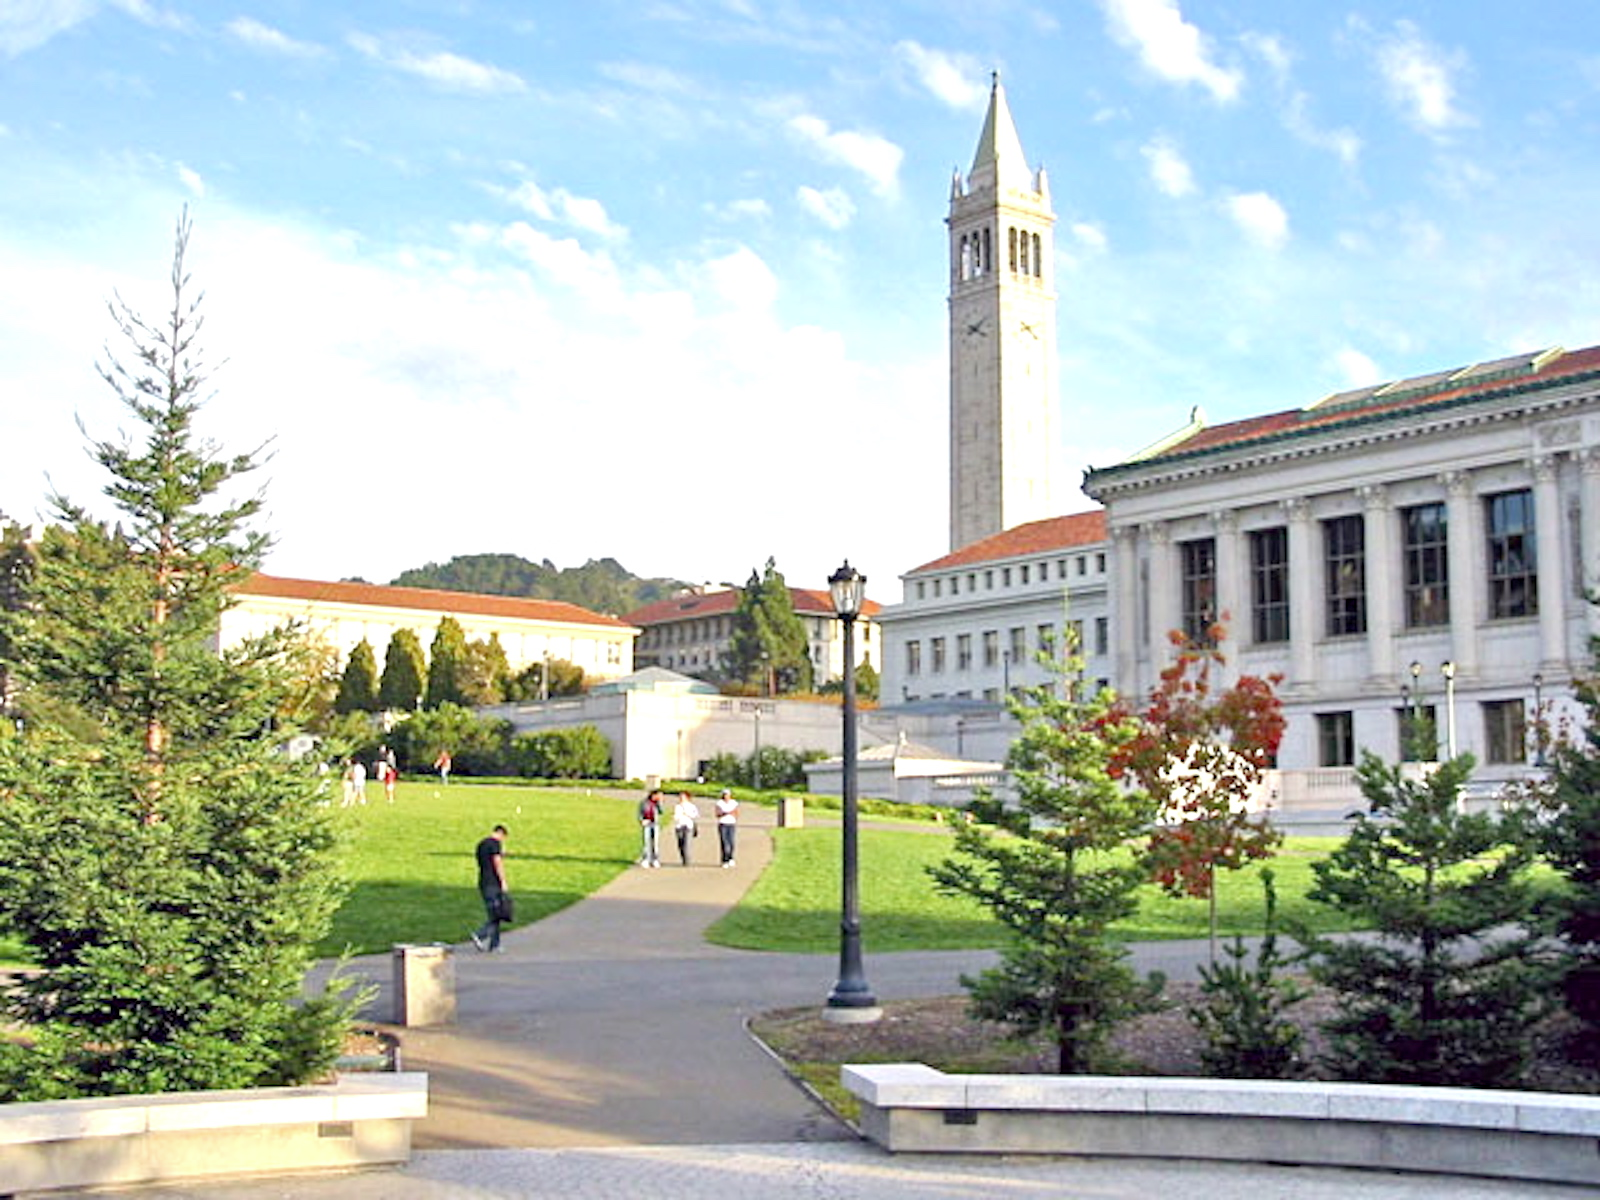 University of California, Berkeley (1) — Often regarded as the academic